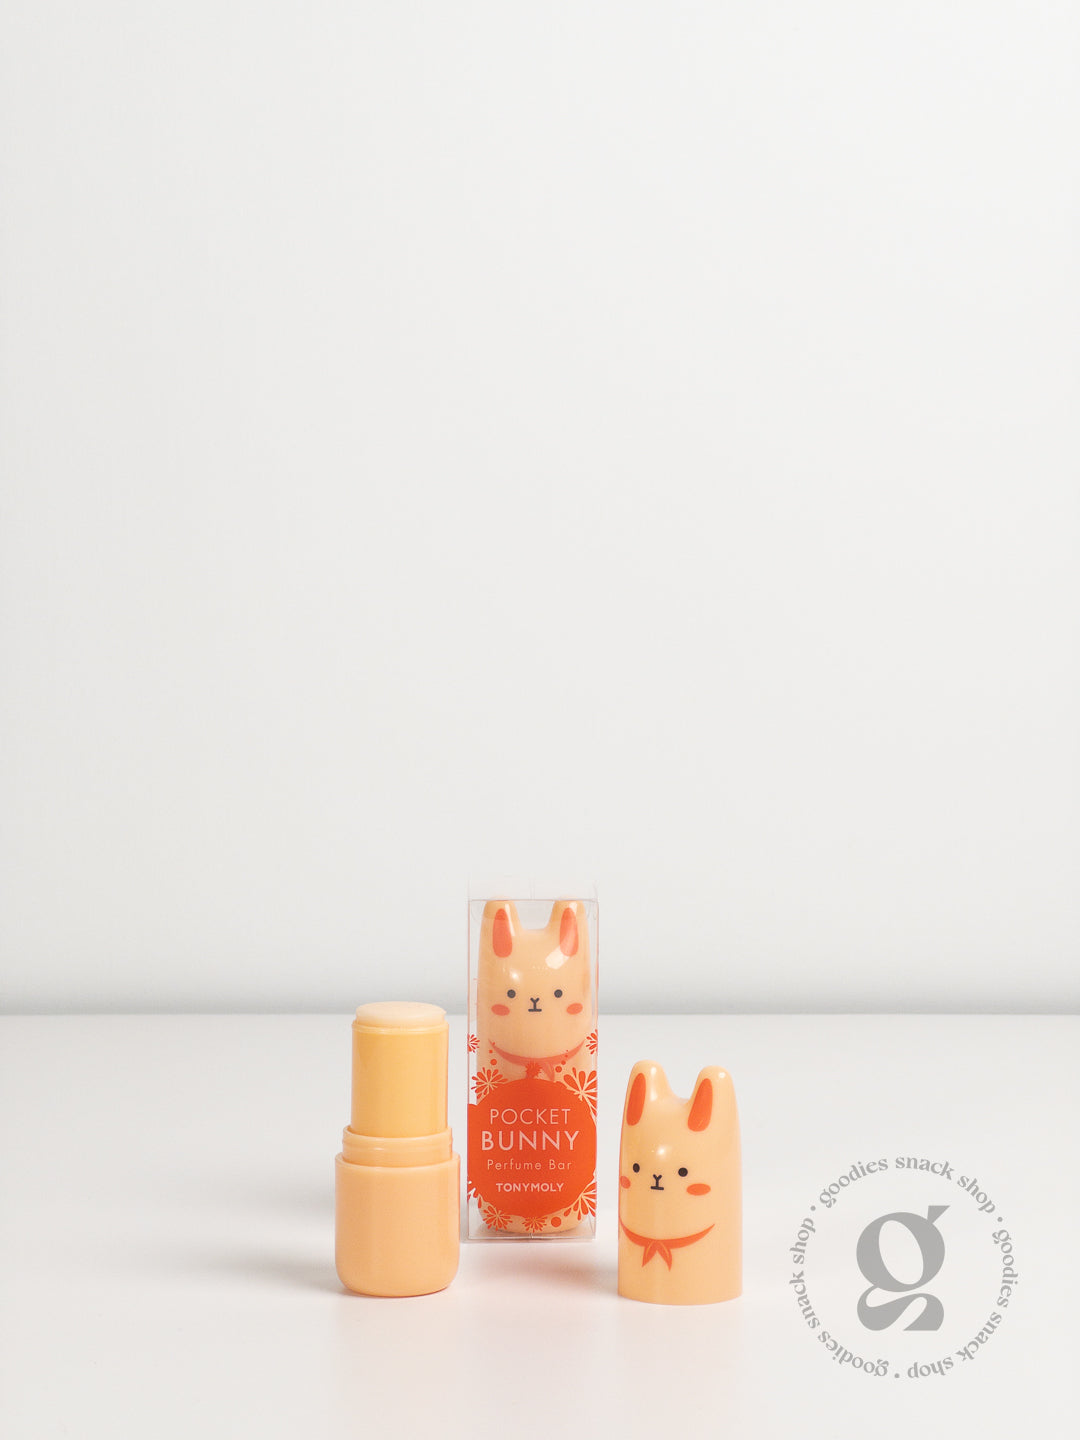 Tonymoly Pocket Bunny - Solid Perfume ‘Juicy’